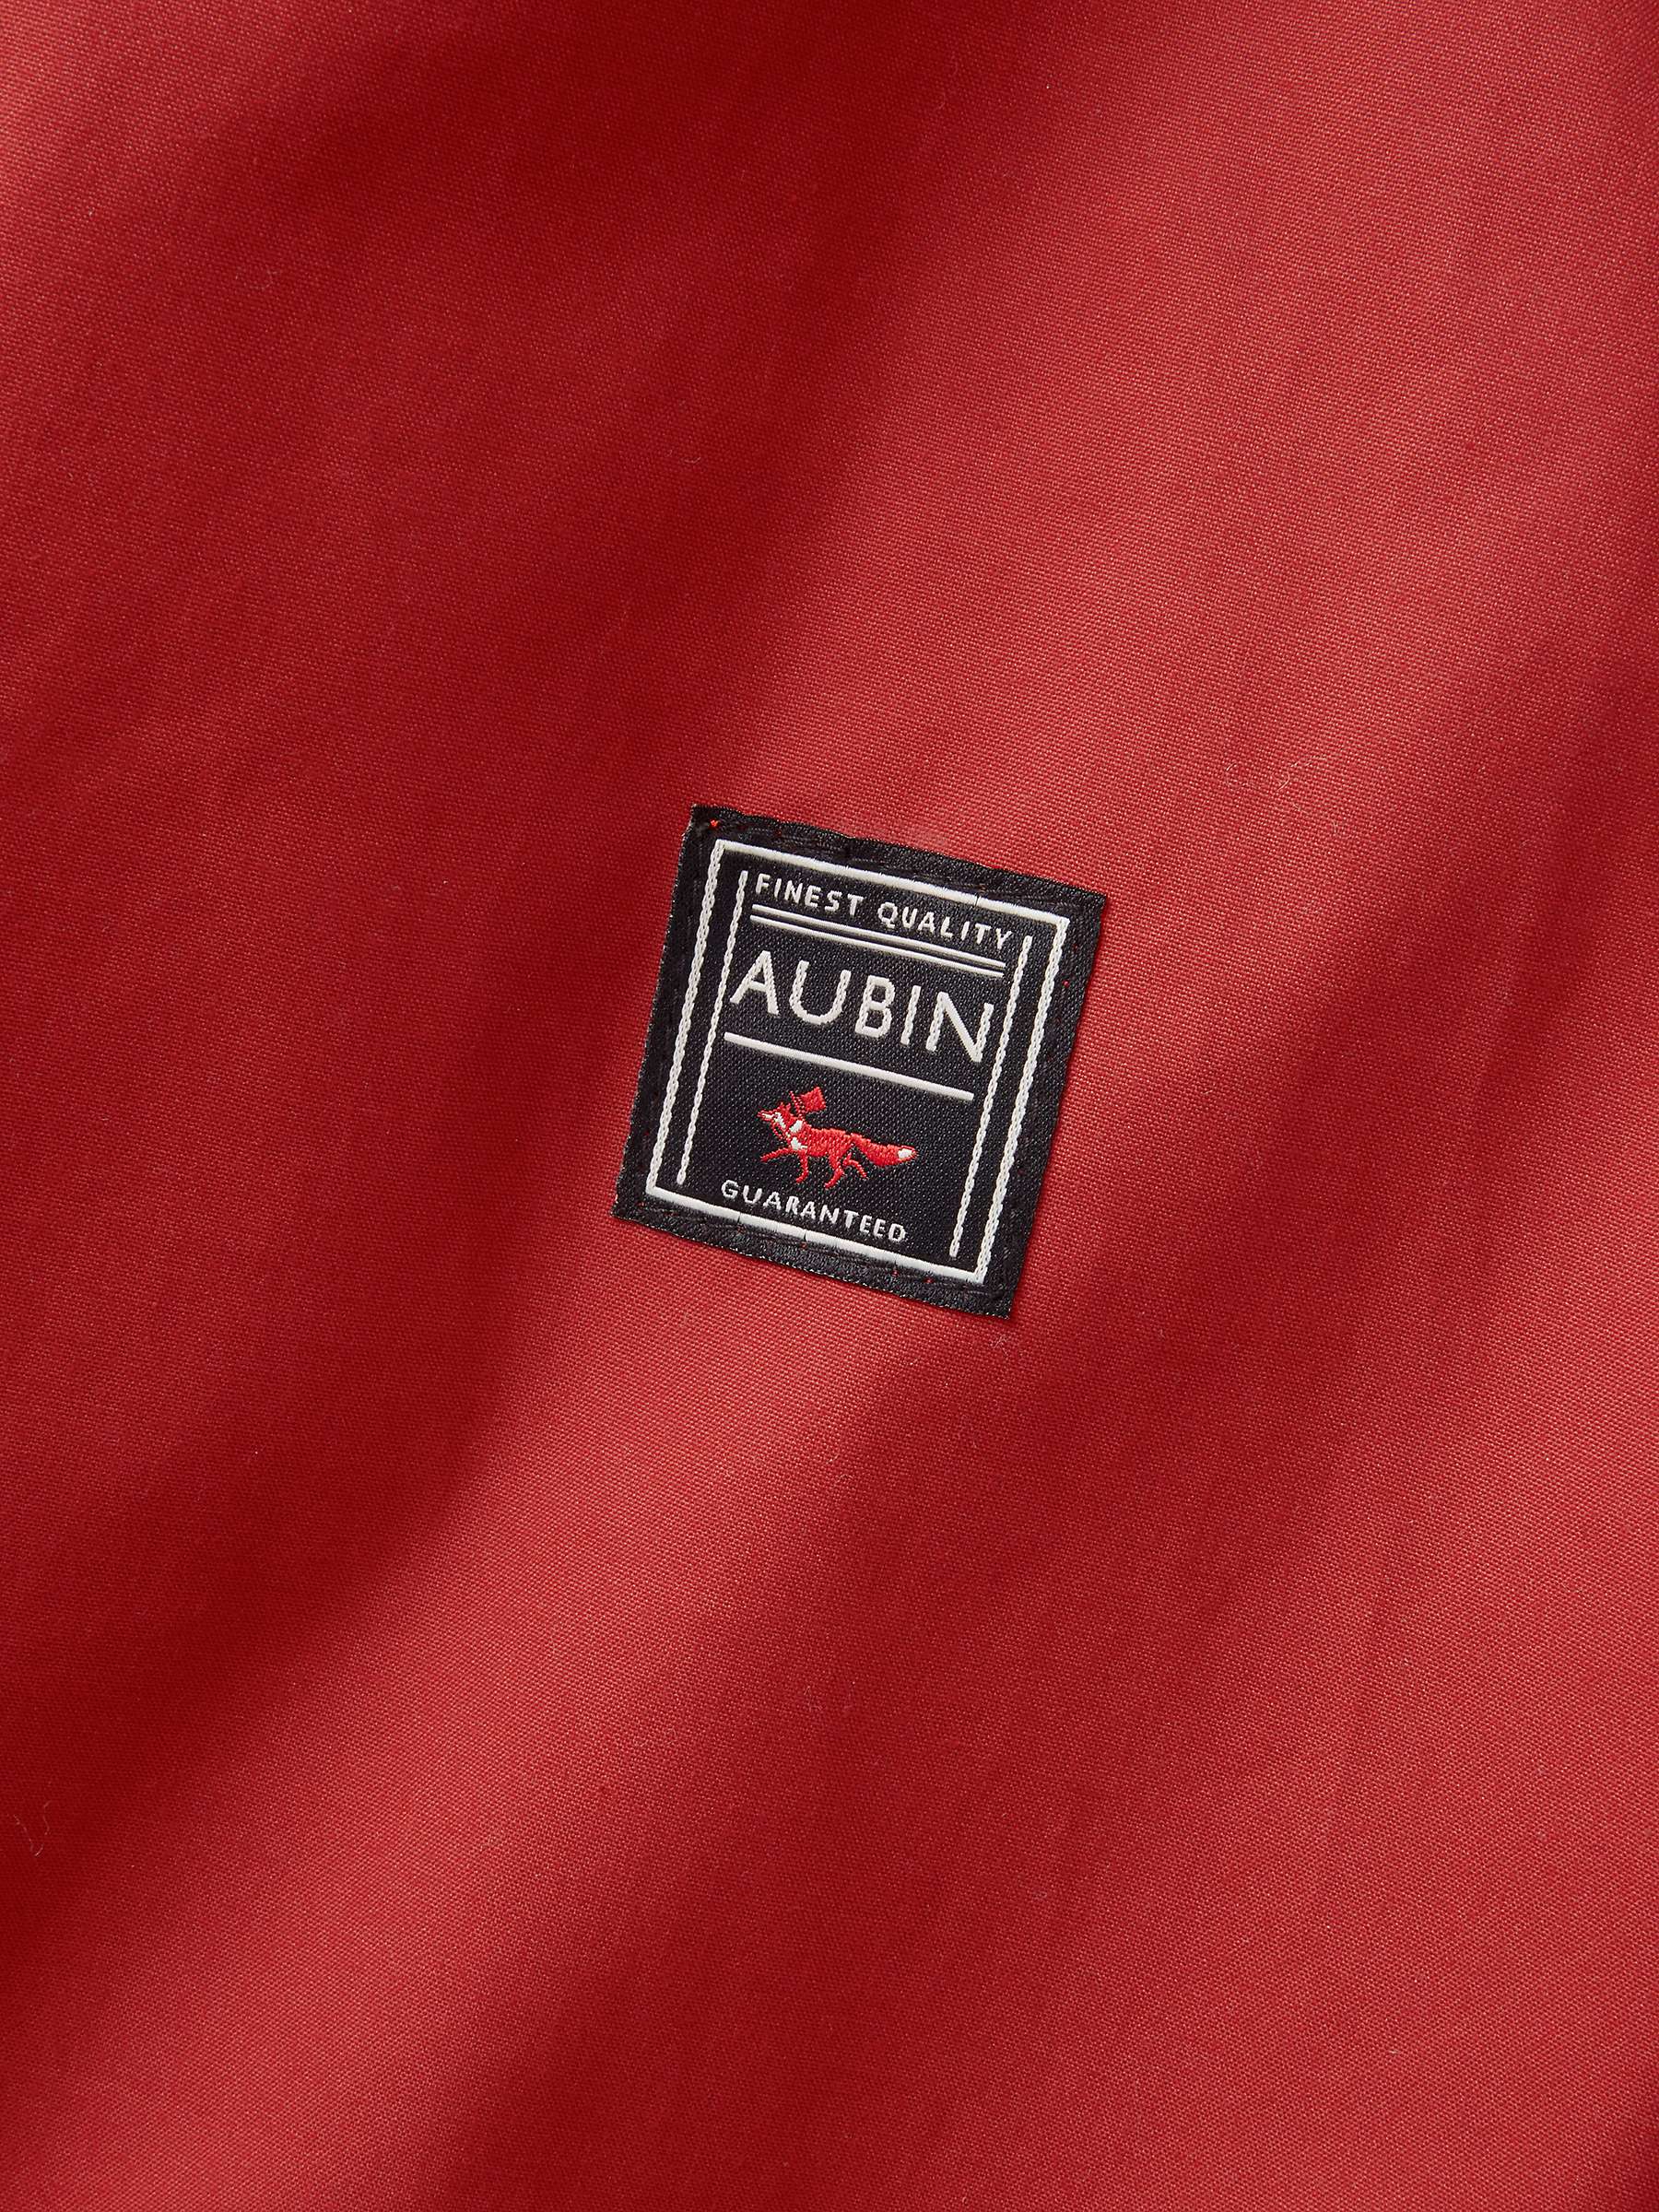 Buy Aubin Union Waxed Cotton Jacket Online at johnlewis.com